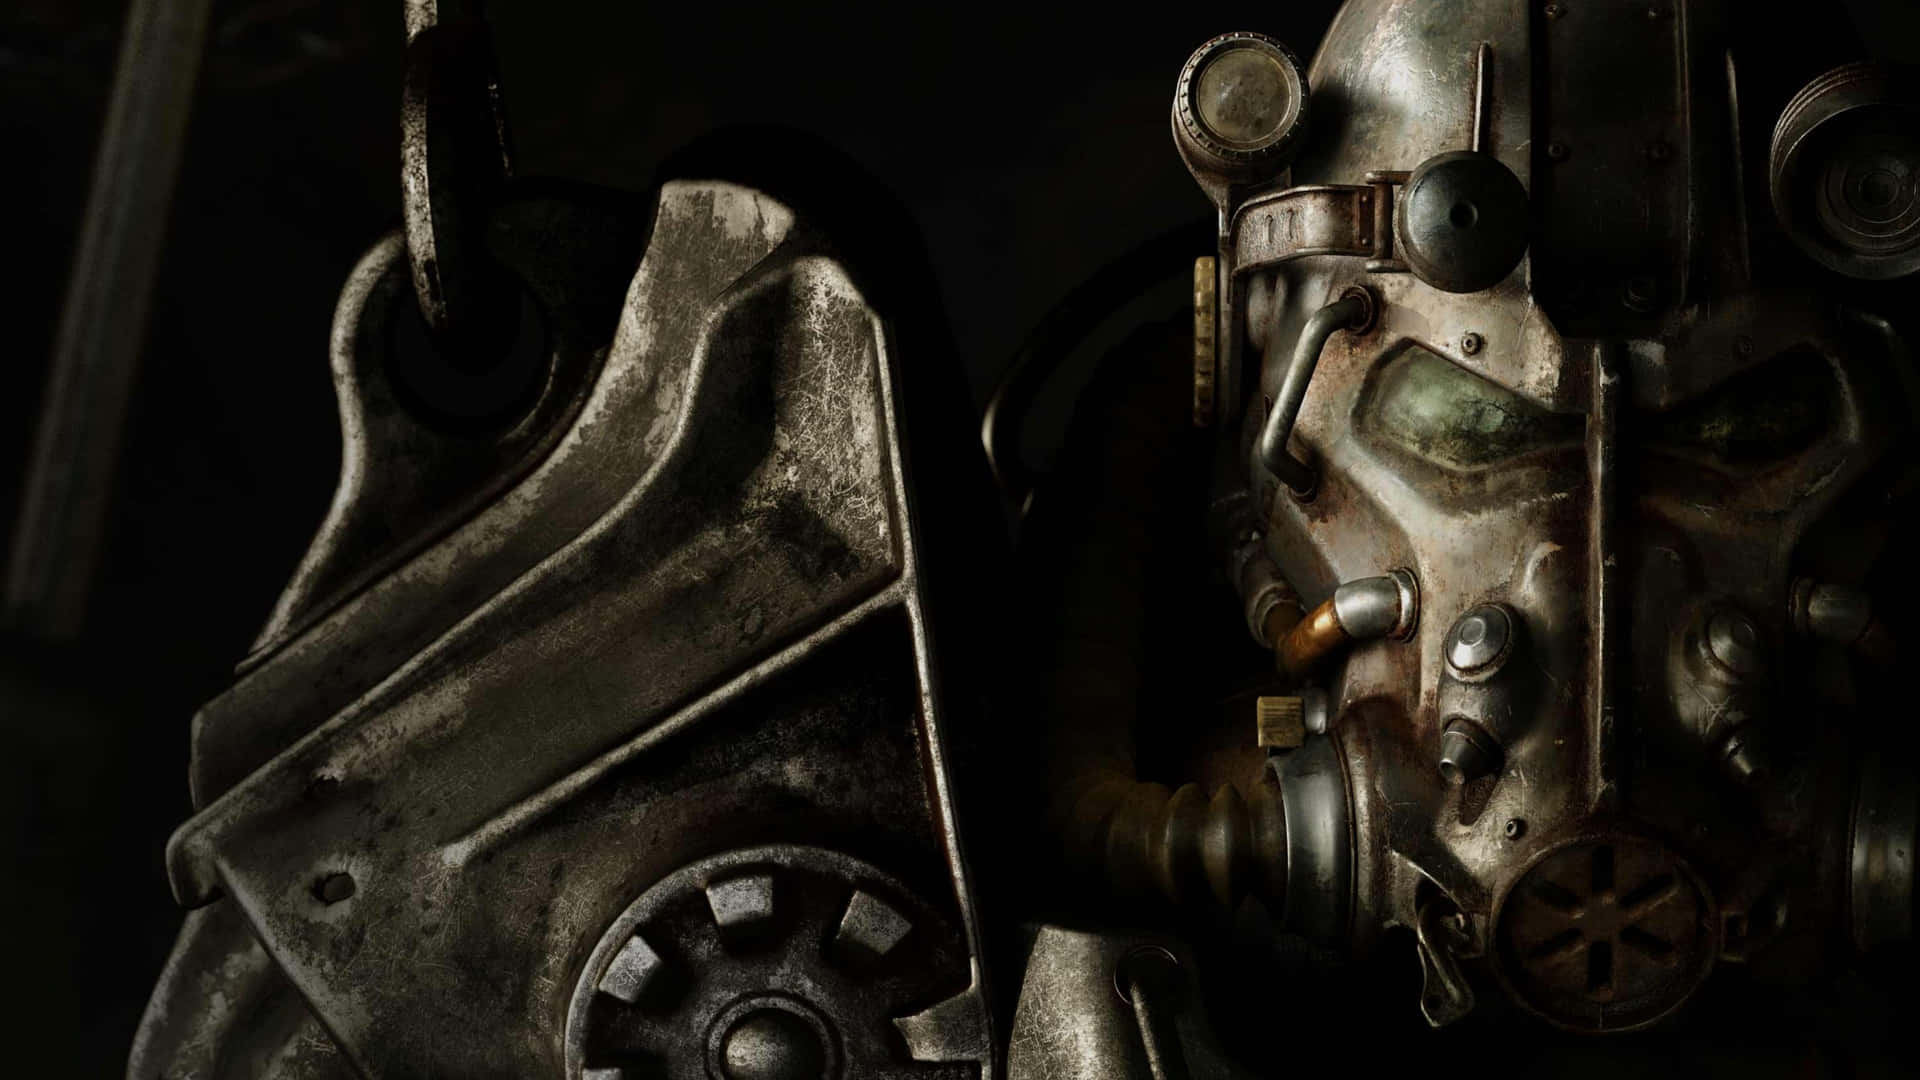 Fallout 76 Baggrund 3840 X 2160